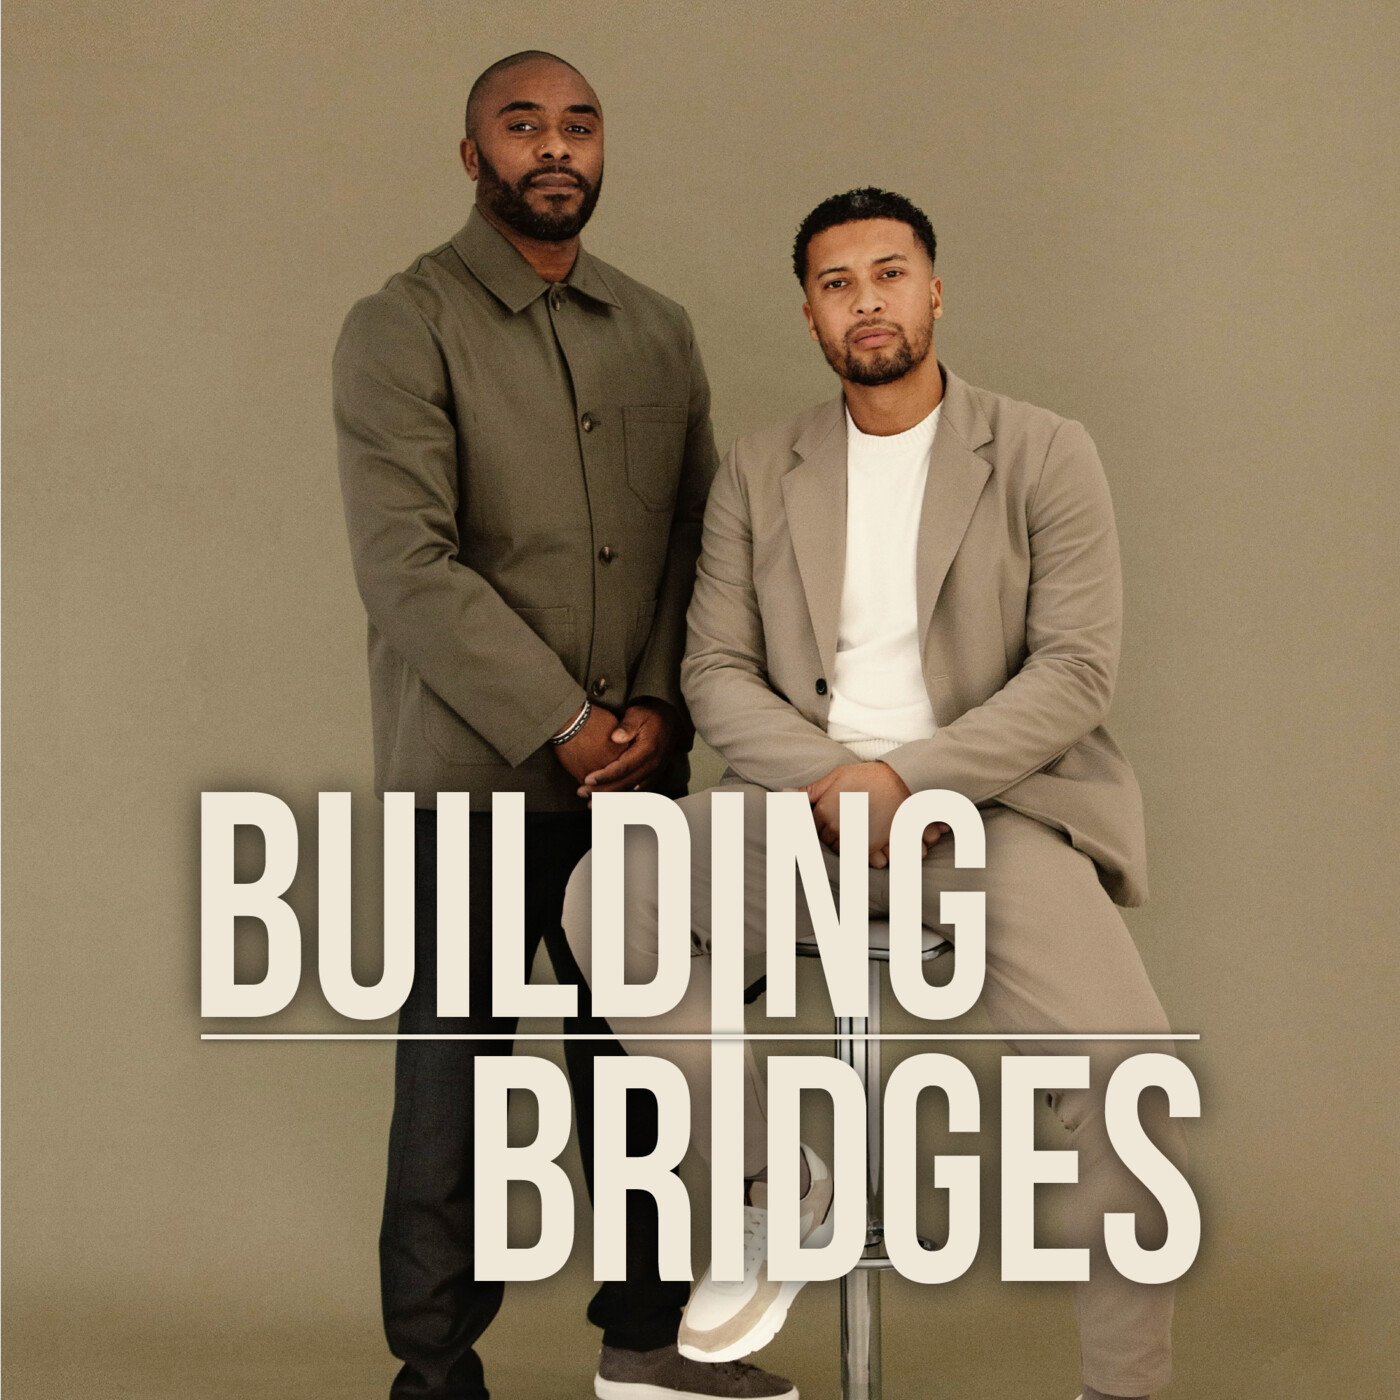 Building Bridges logo